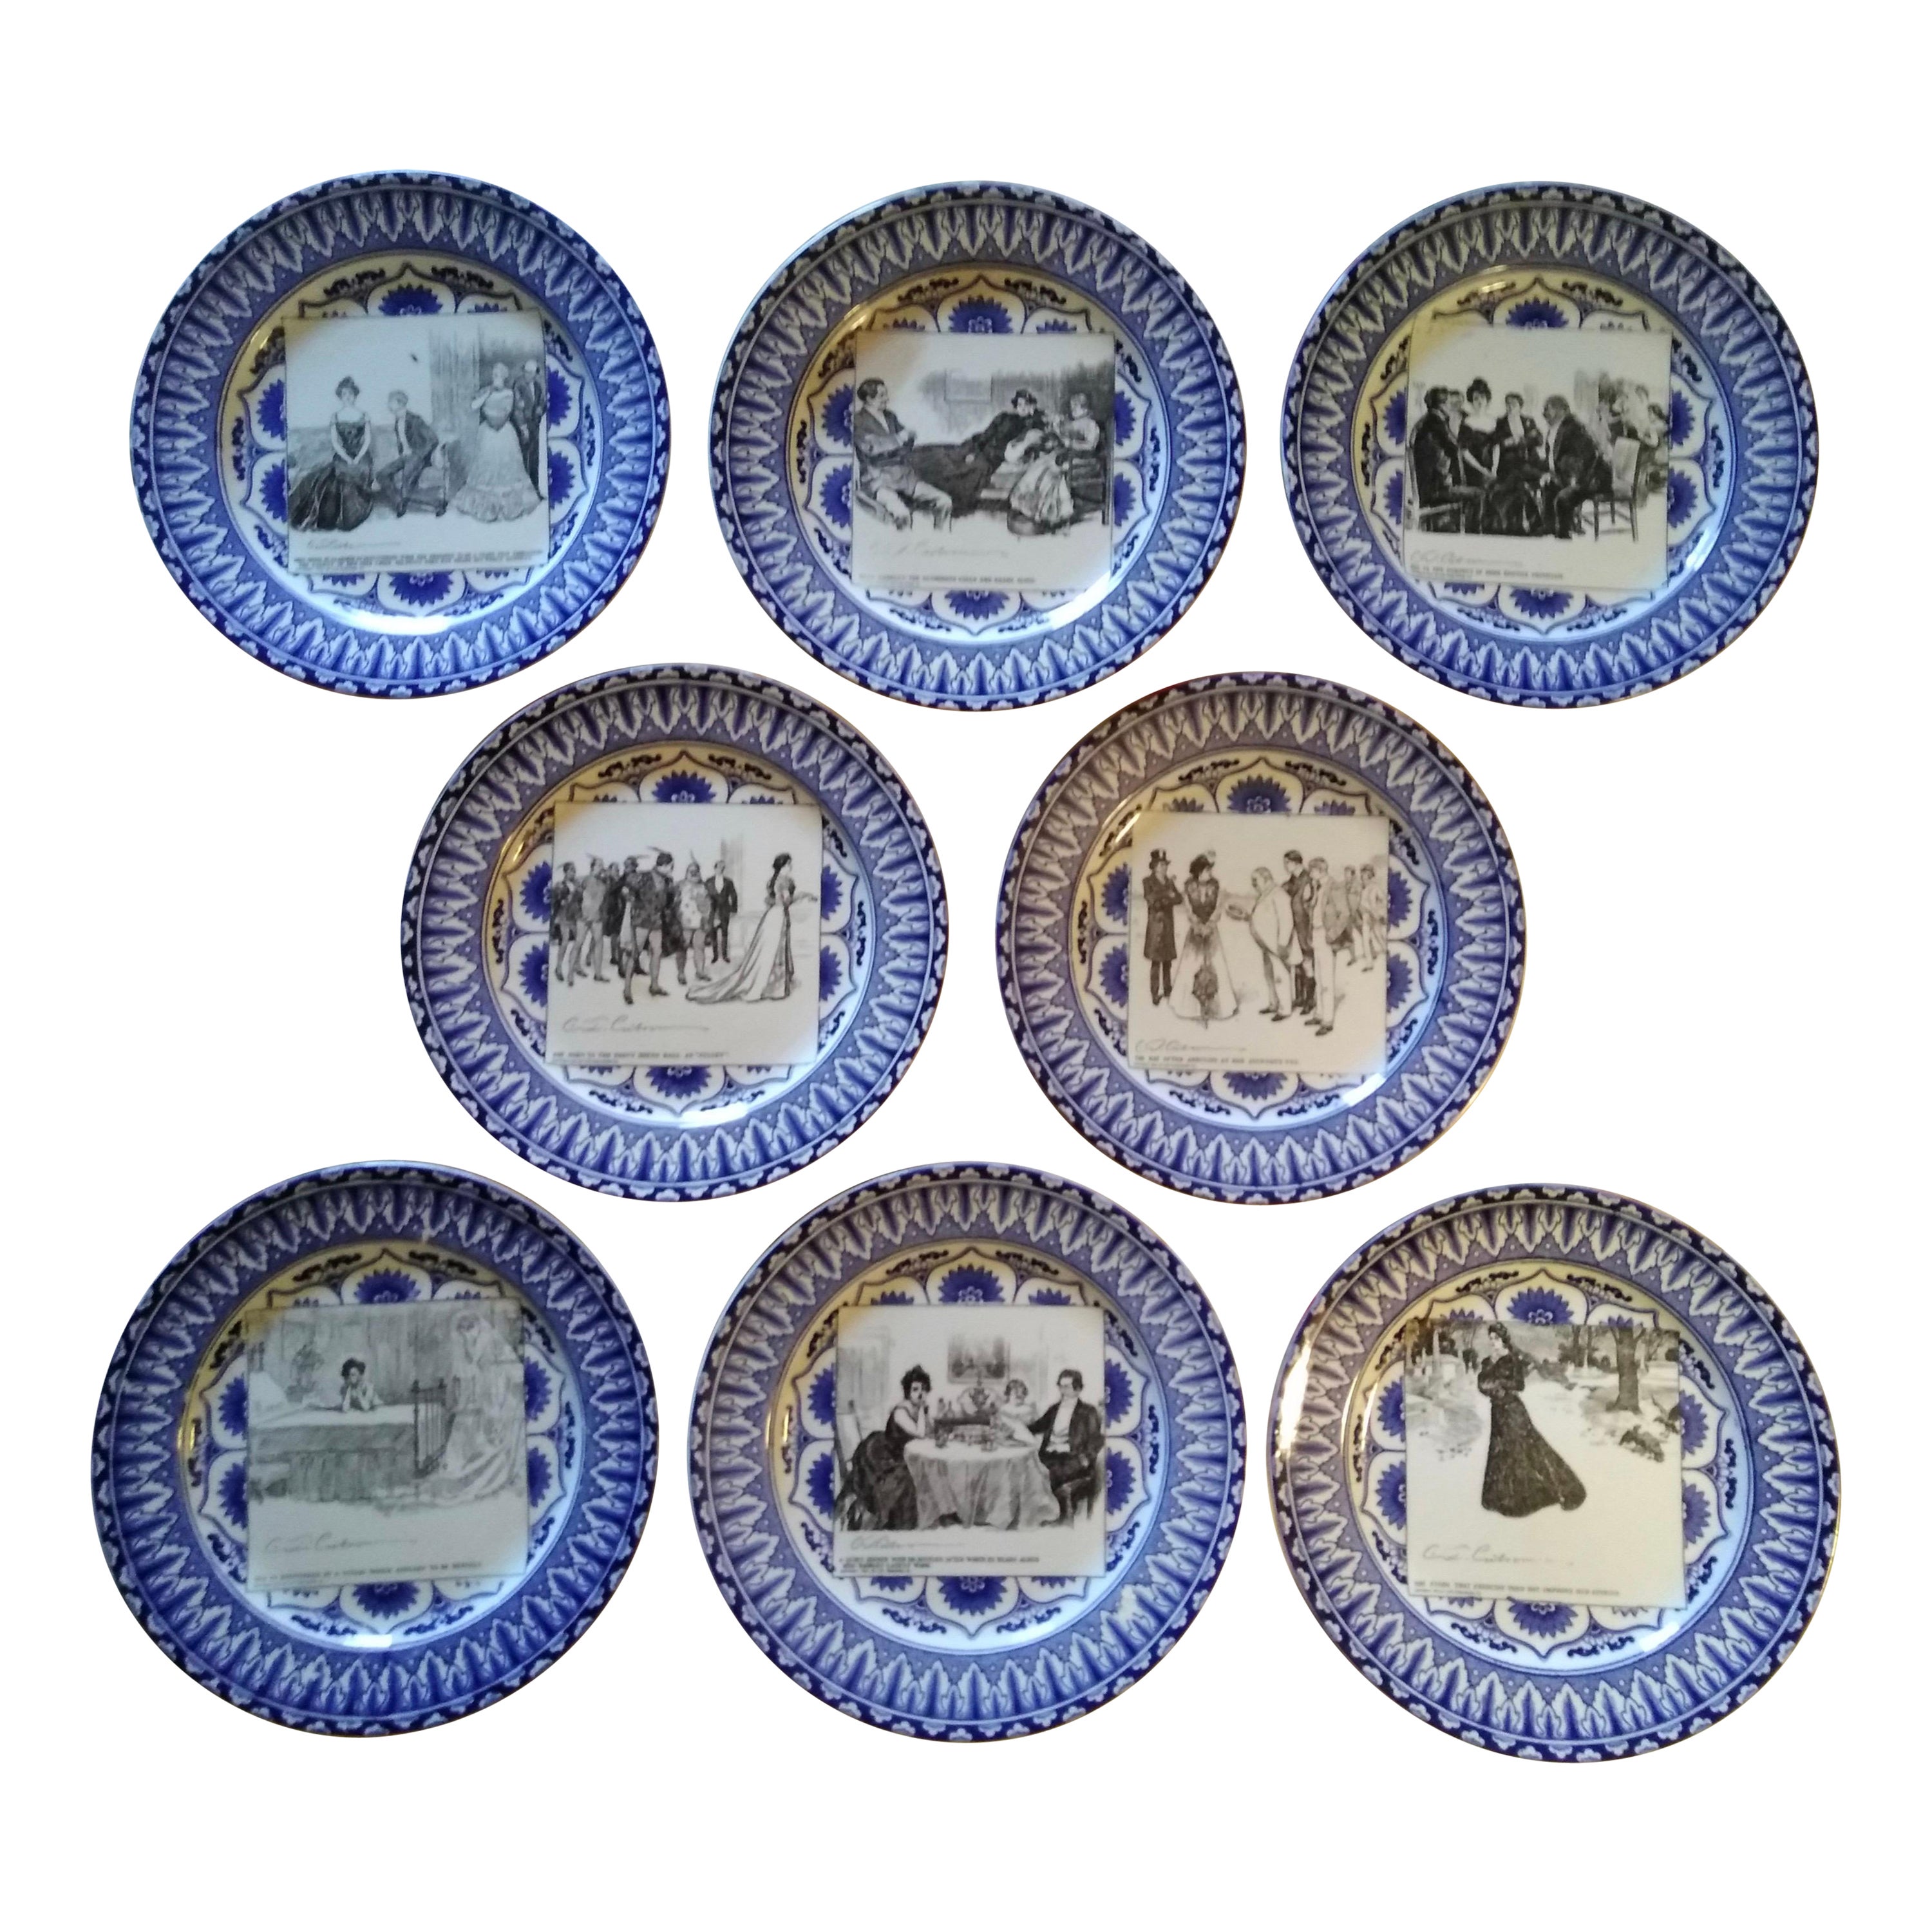 Royal Doulton Decorative Plates Featuring Charles Dana Gibson Illustrations